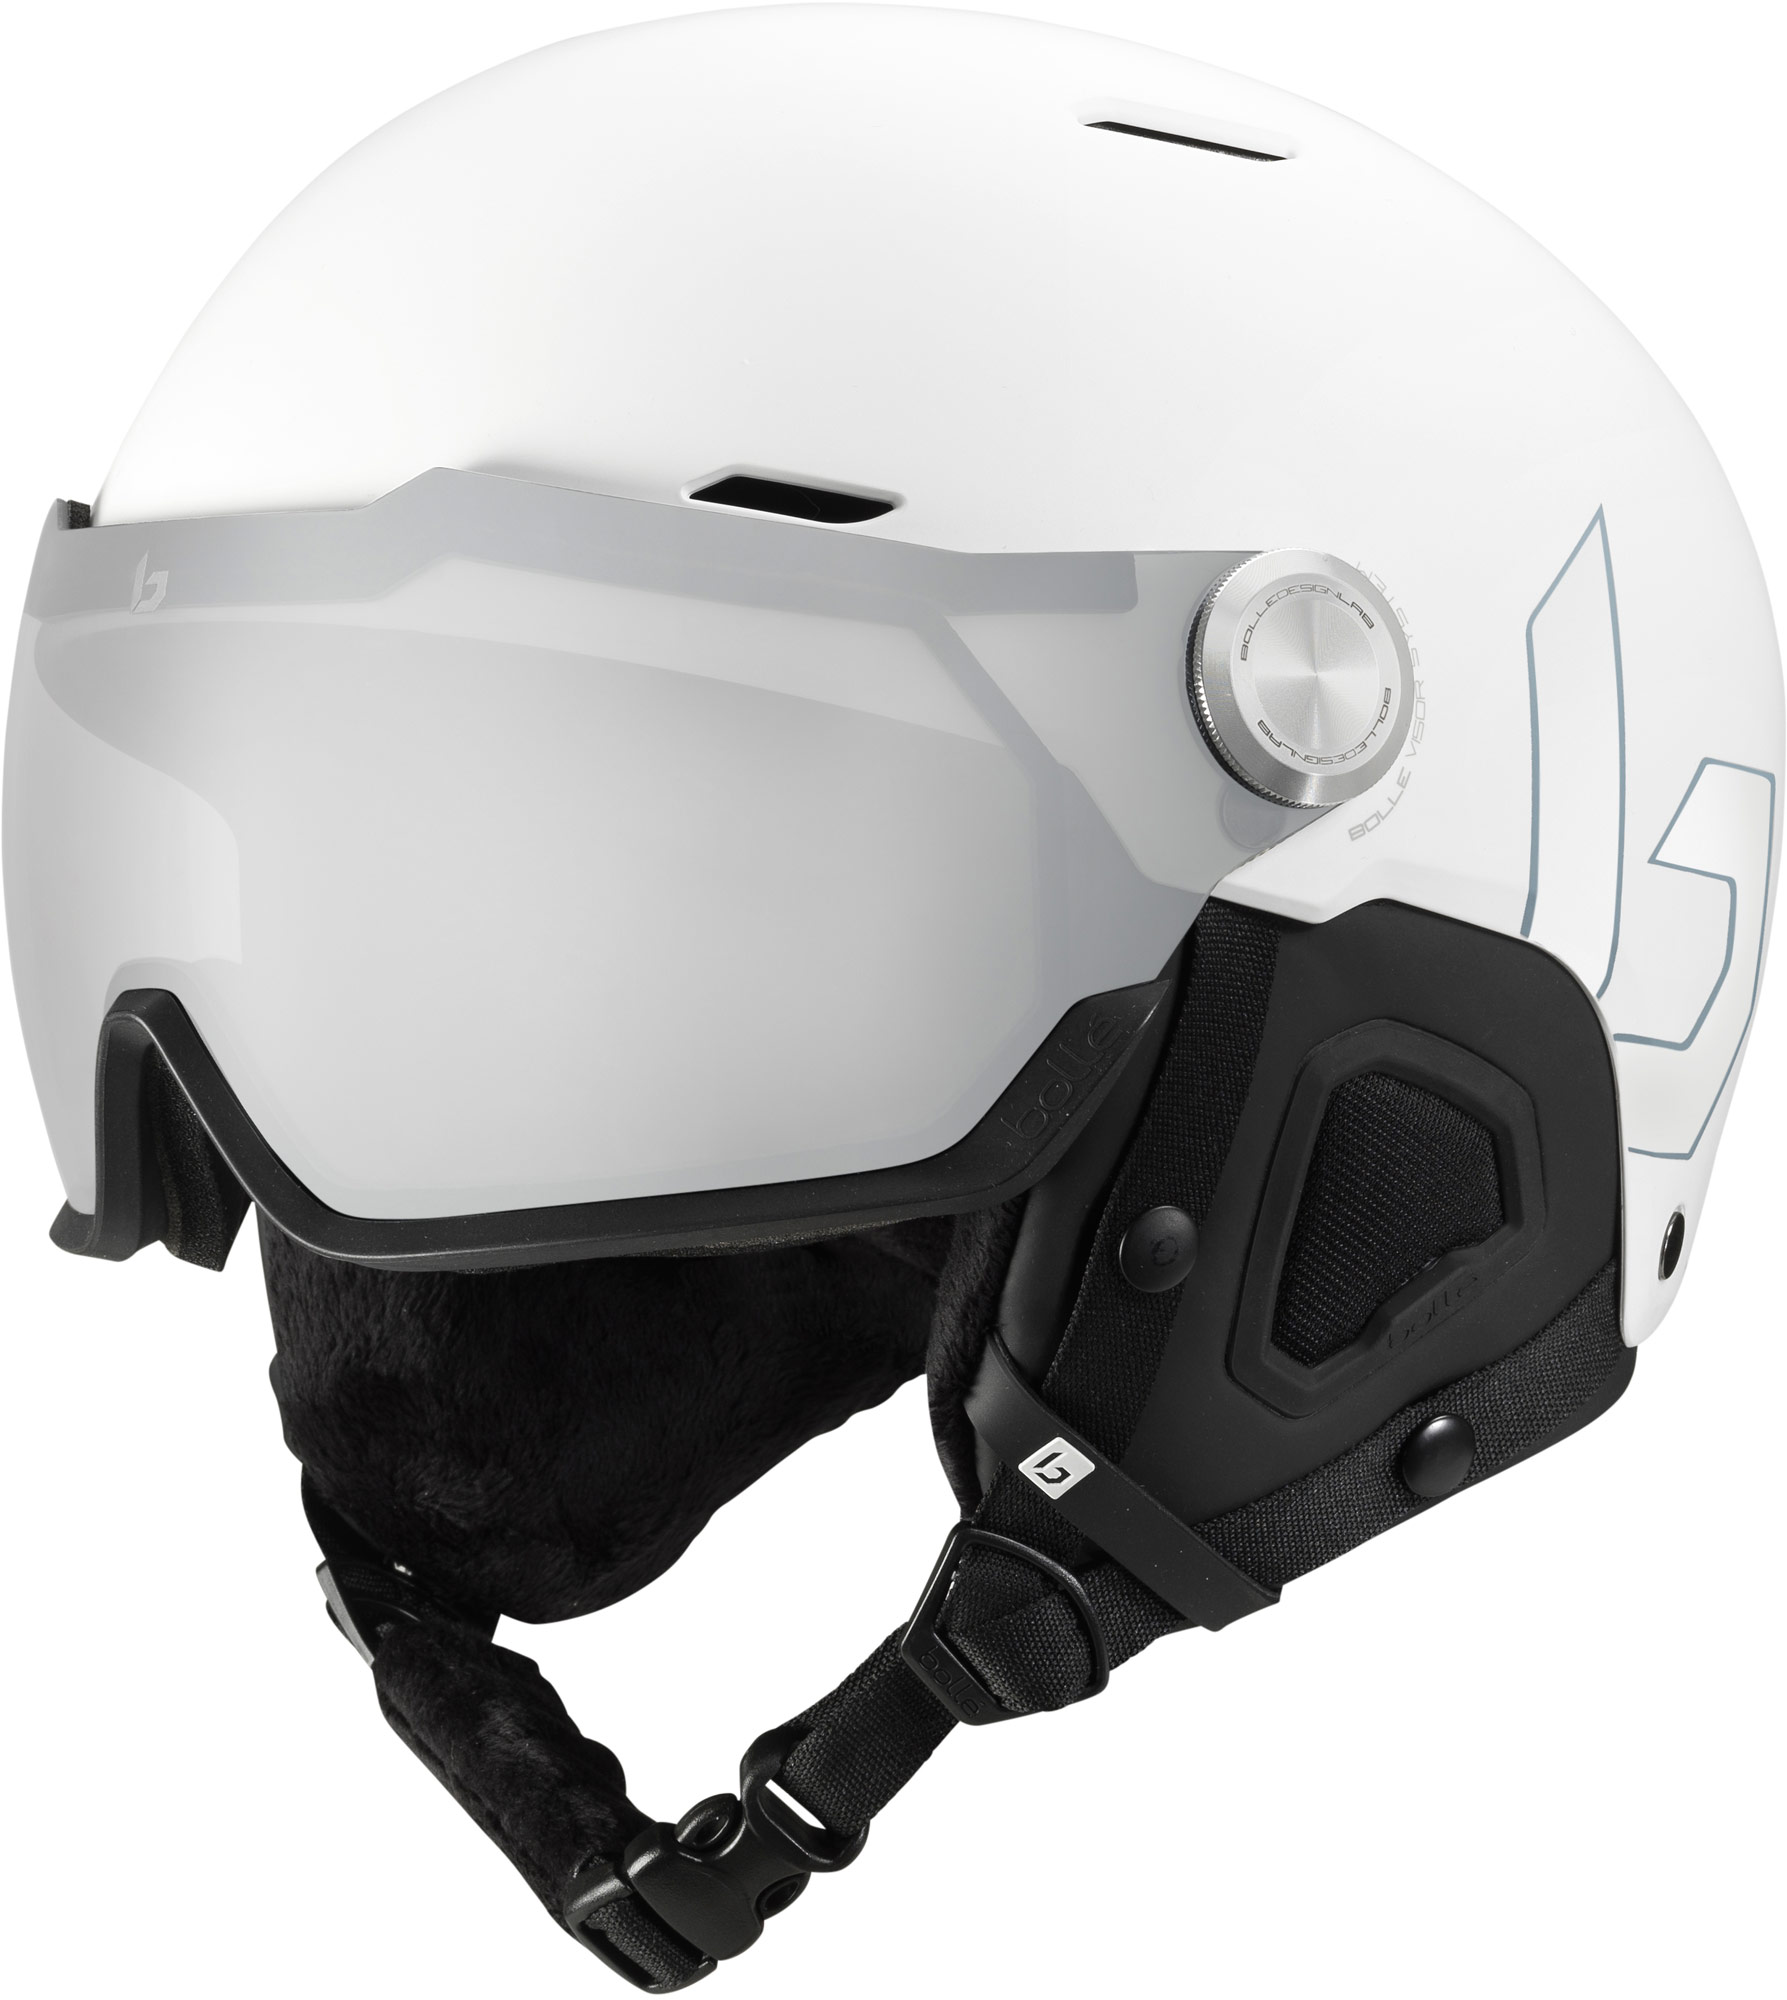 Downhill helmet with a self-tinting visor